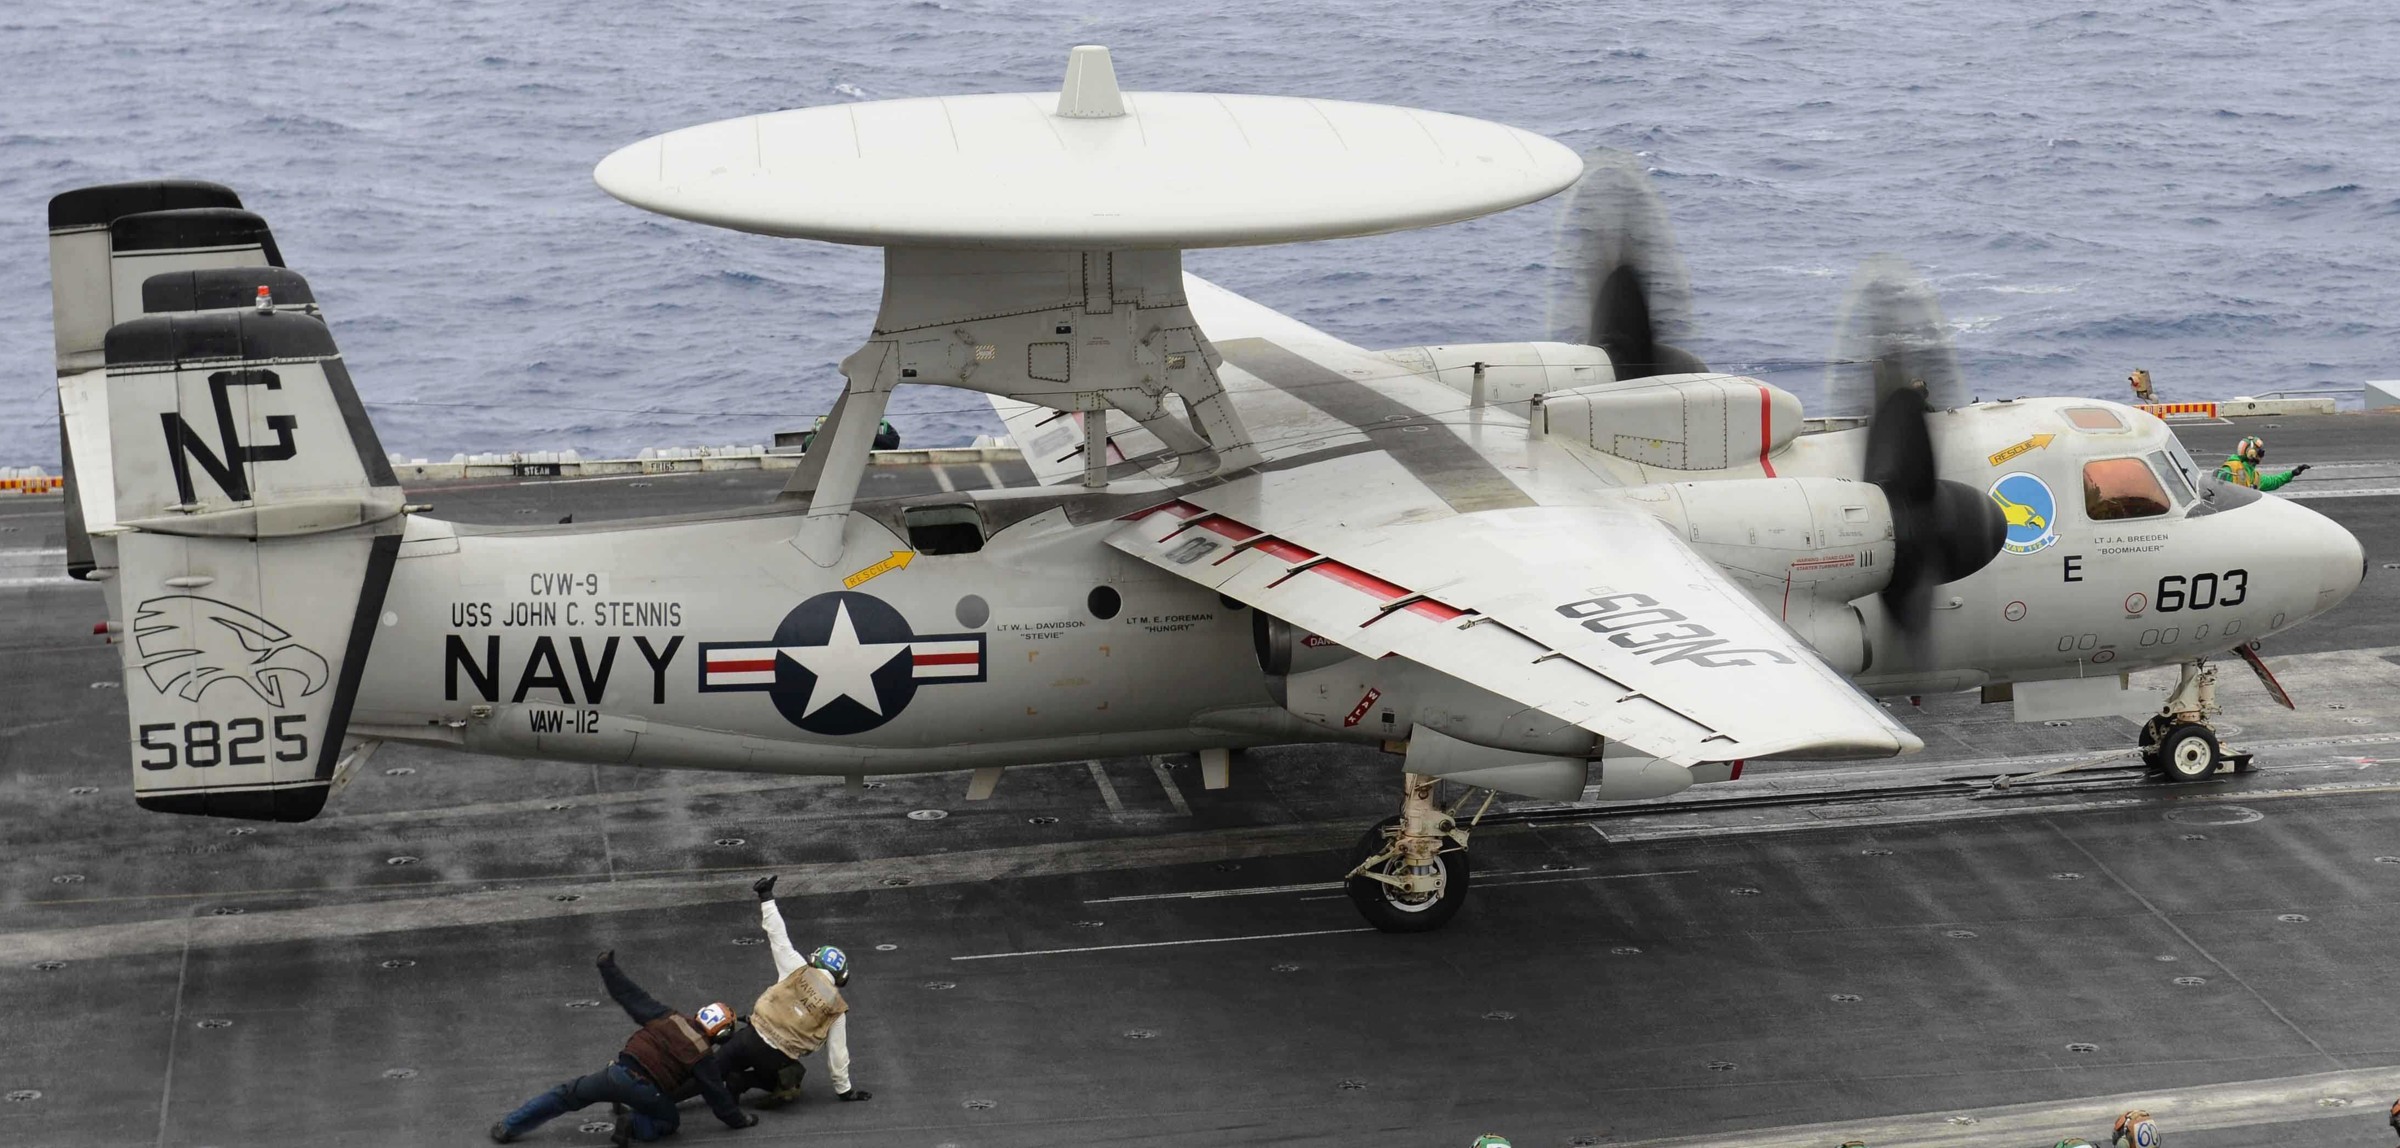 vaw-112 golden hawks carrier airborne early warning squadron us navy grumman e-2c hawkeye 31x uss cvw